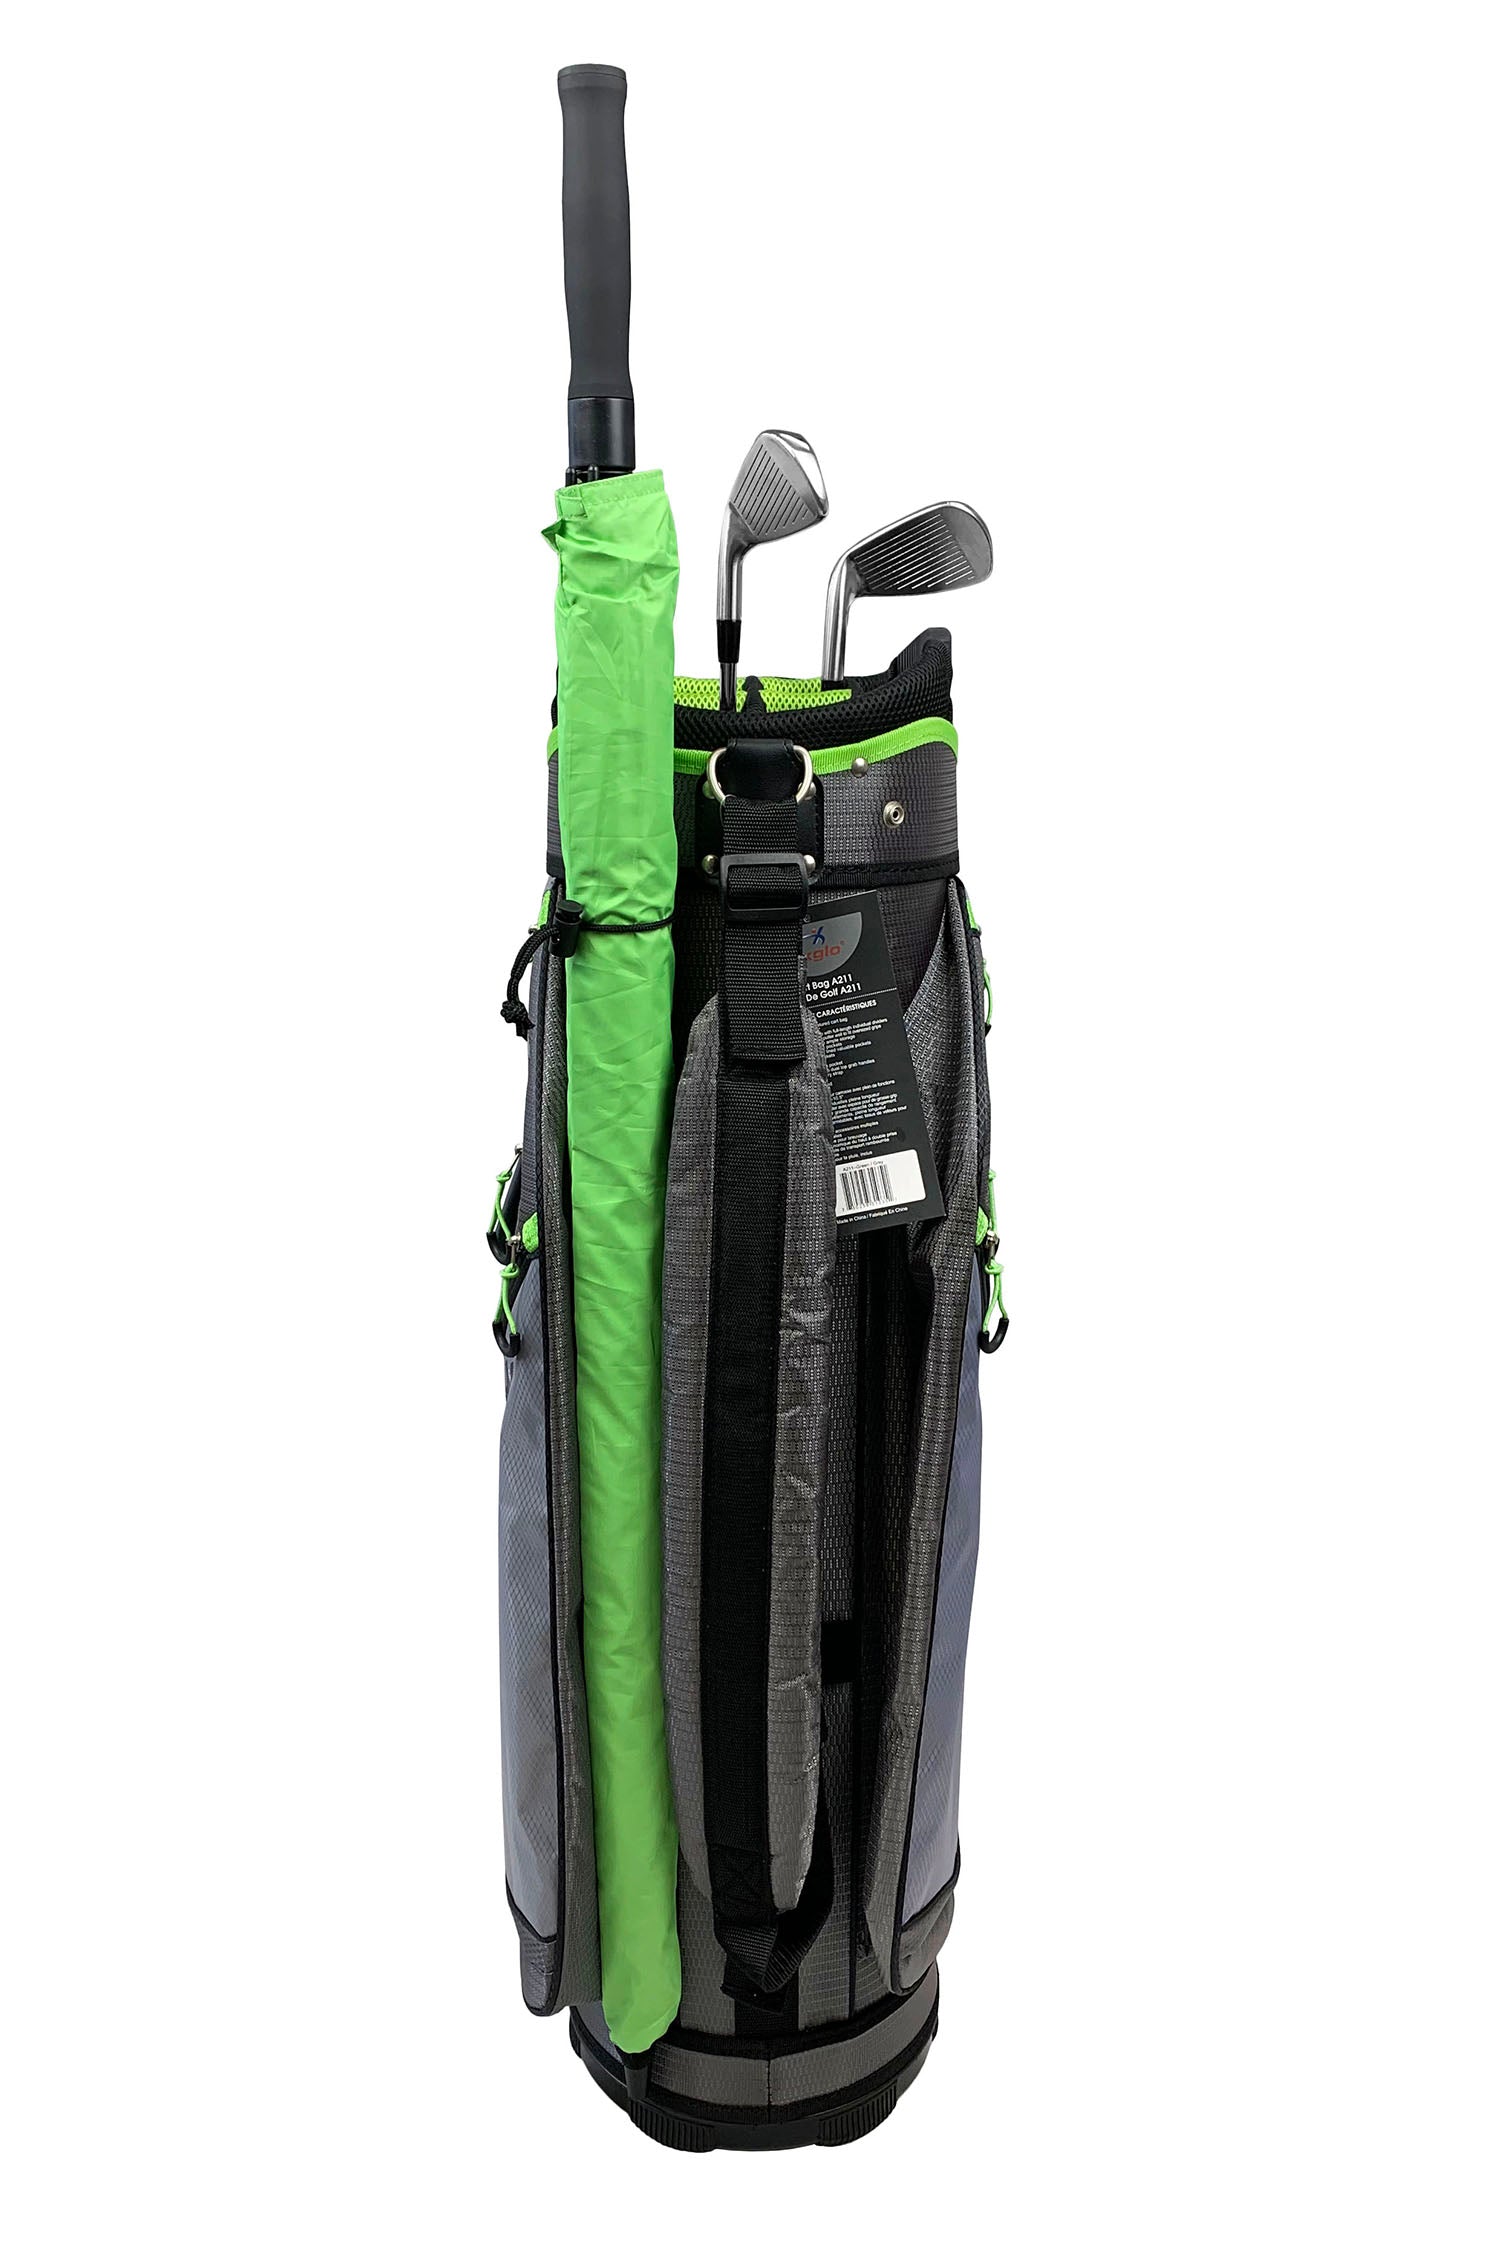 Axglo Golf Cart Bag - Green/Grey with umbrella holder